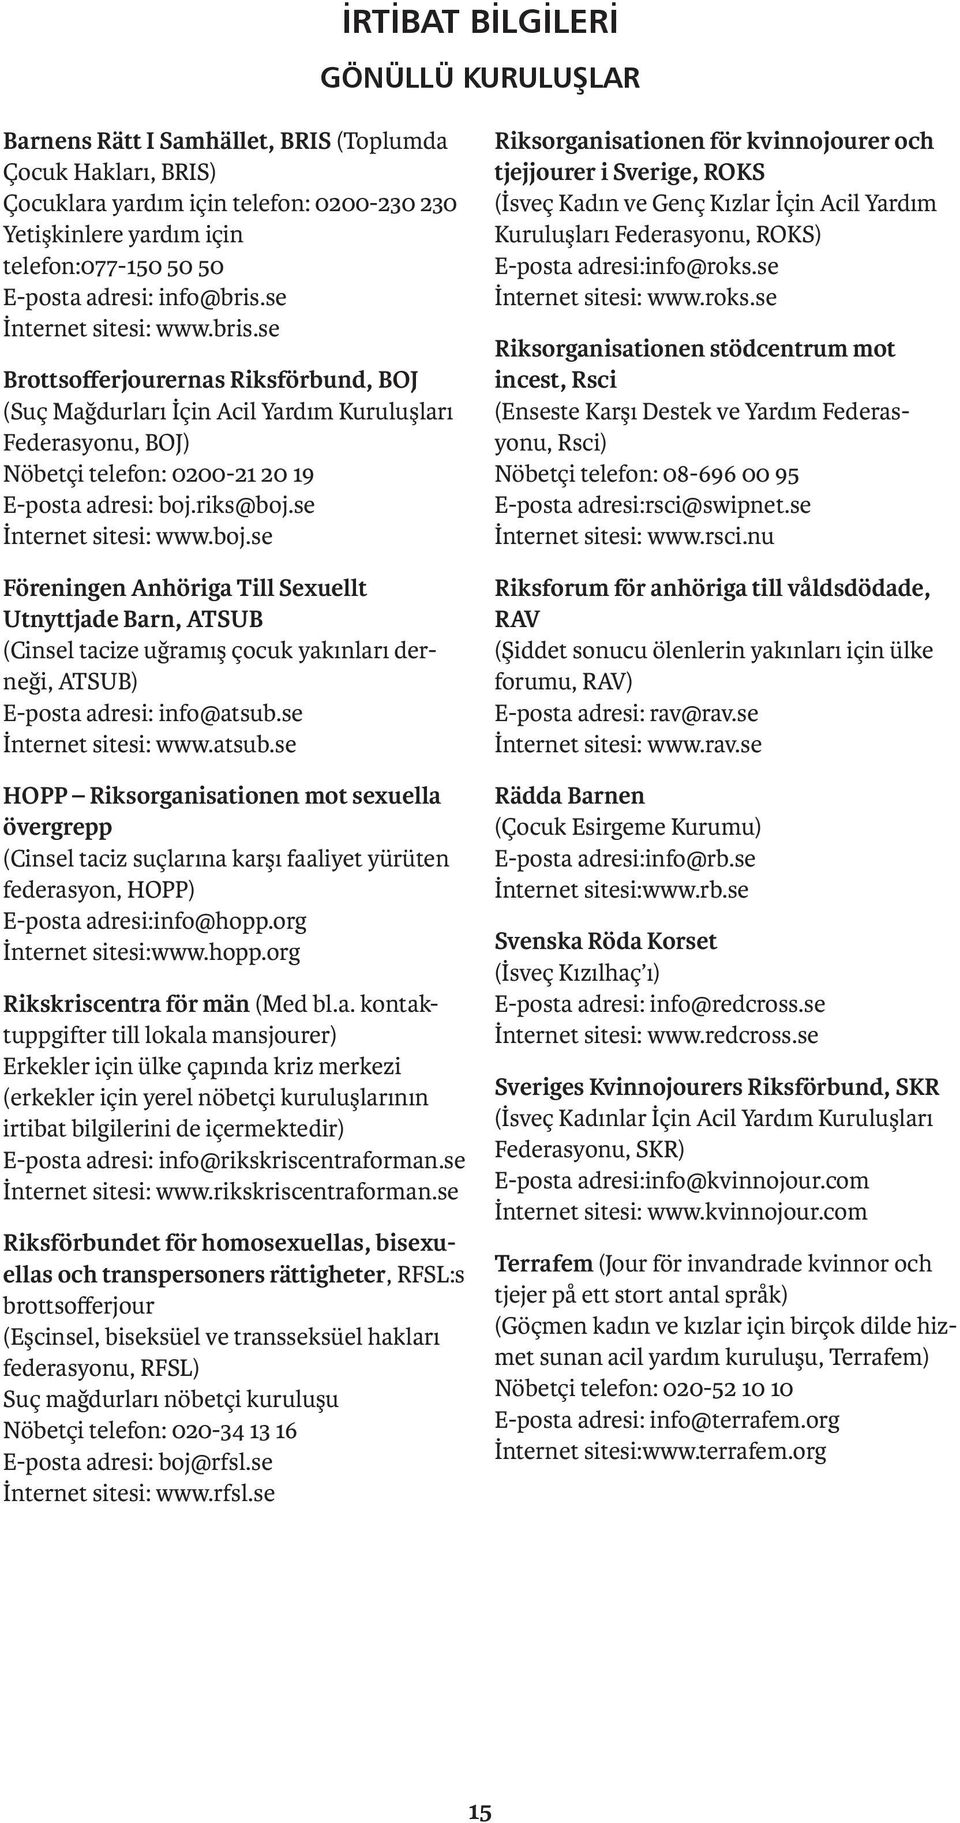 riks@boj.se İnternet sitesi: www.boj.se Föreningen Anhöriga Till Sexuellt Utnyttjade Barn, ATSUB (Cinsel tacize uğramış çocuk yakınları derneği, ATSUB) E-posta adresi: info@atsub.